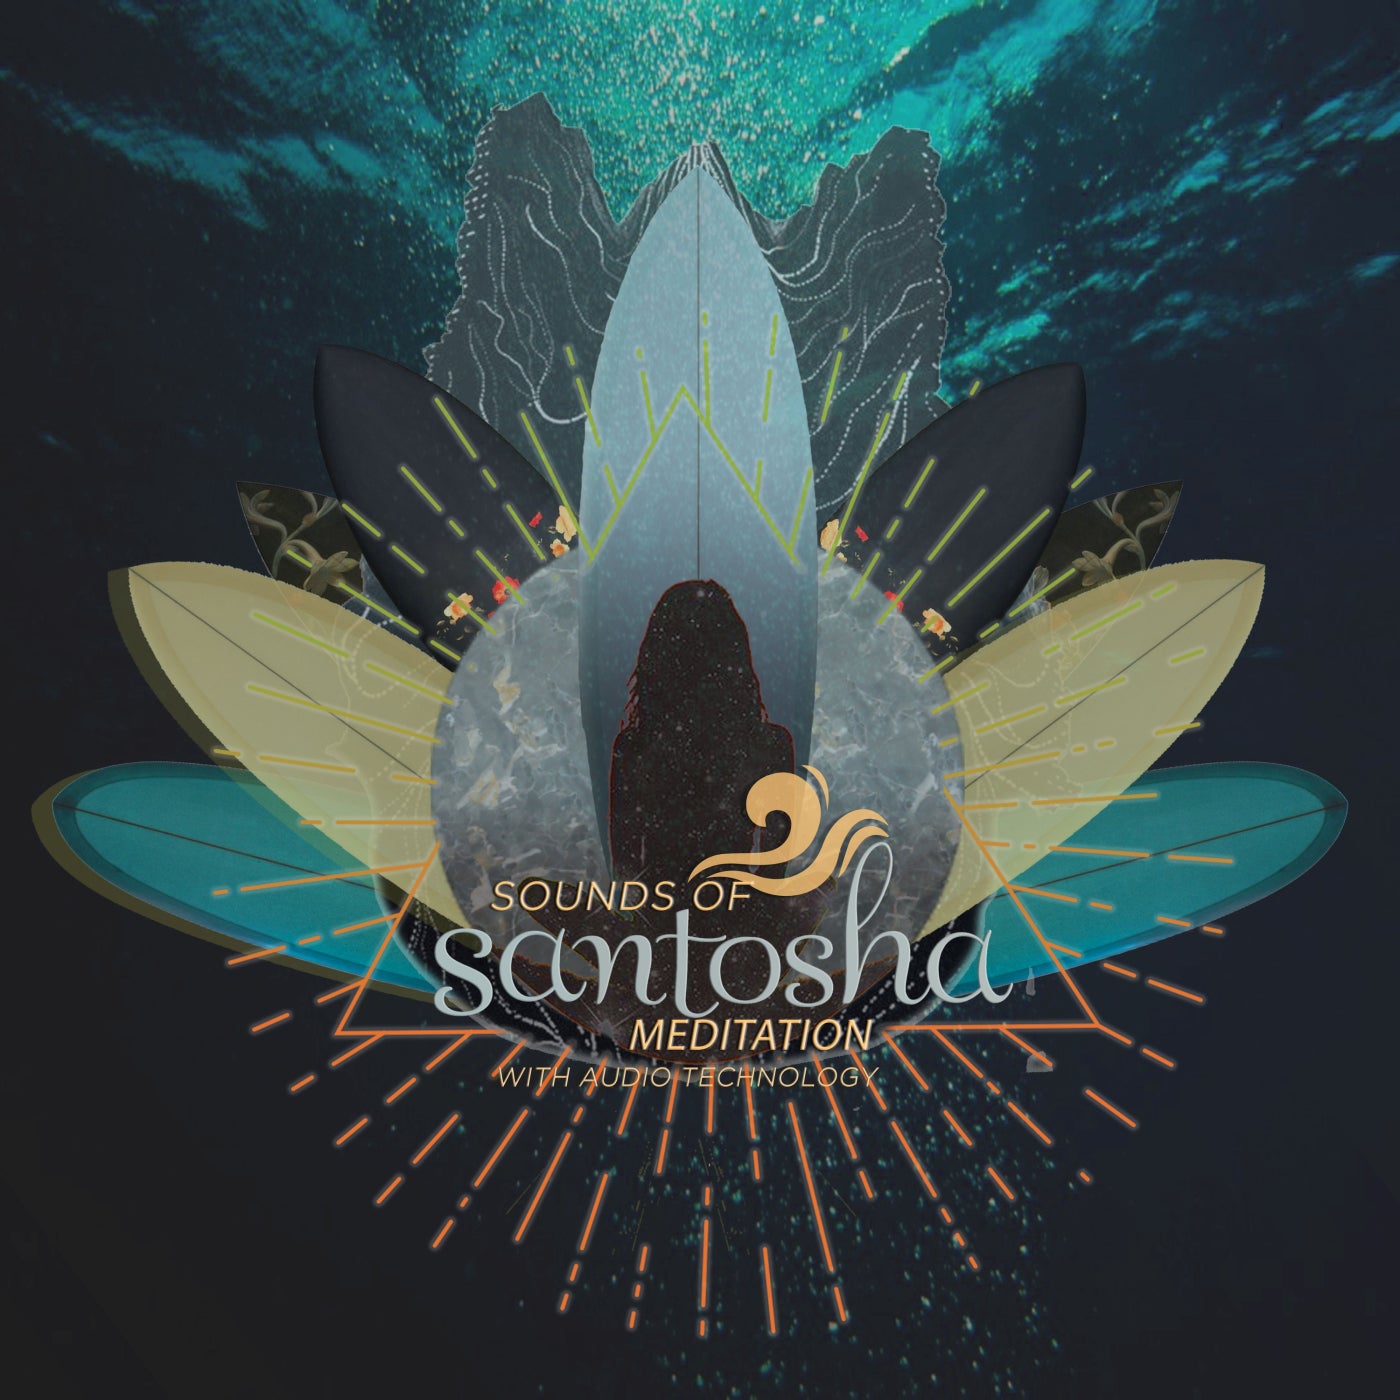 Sounds of Santosha Meditation